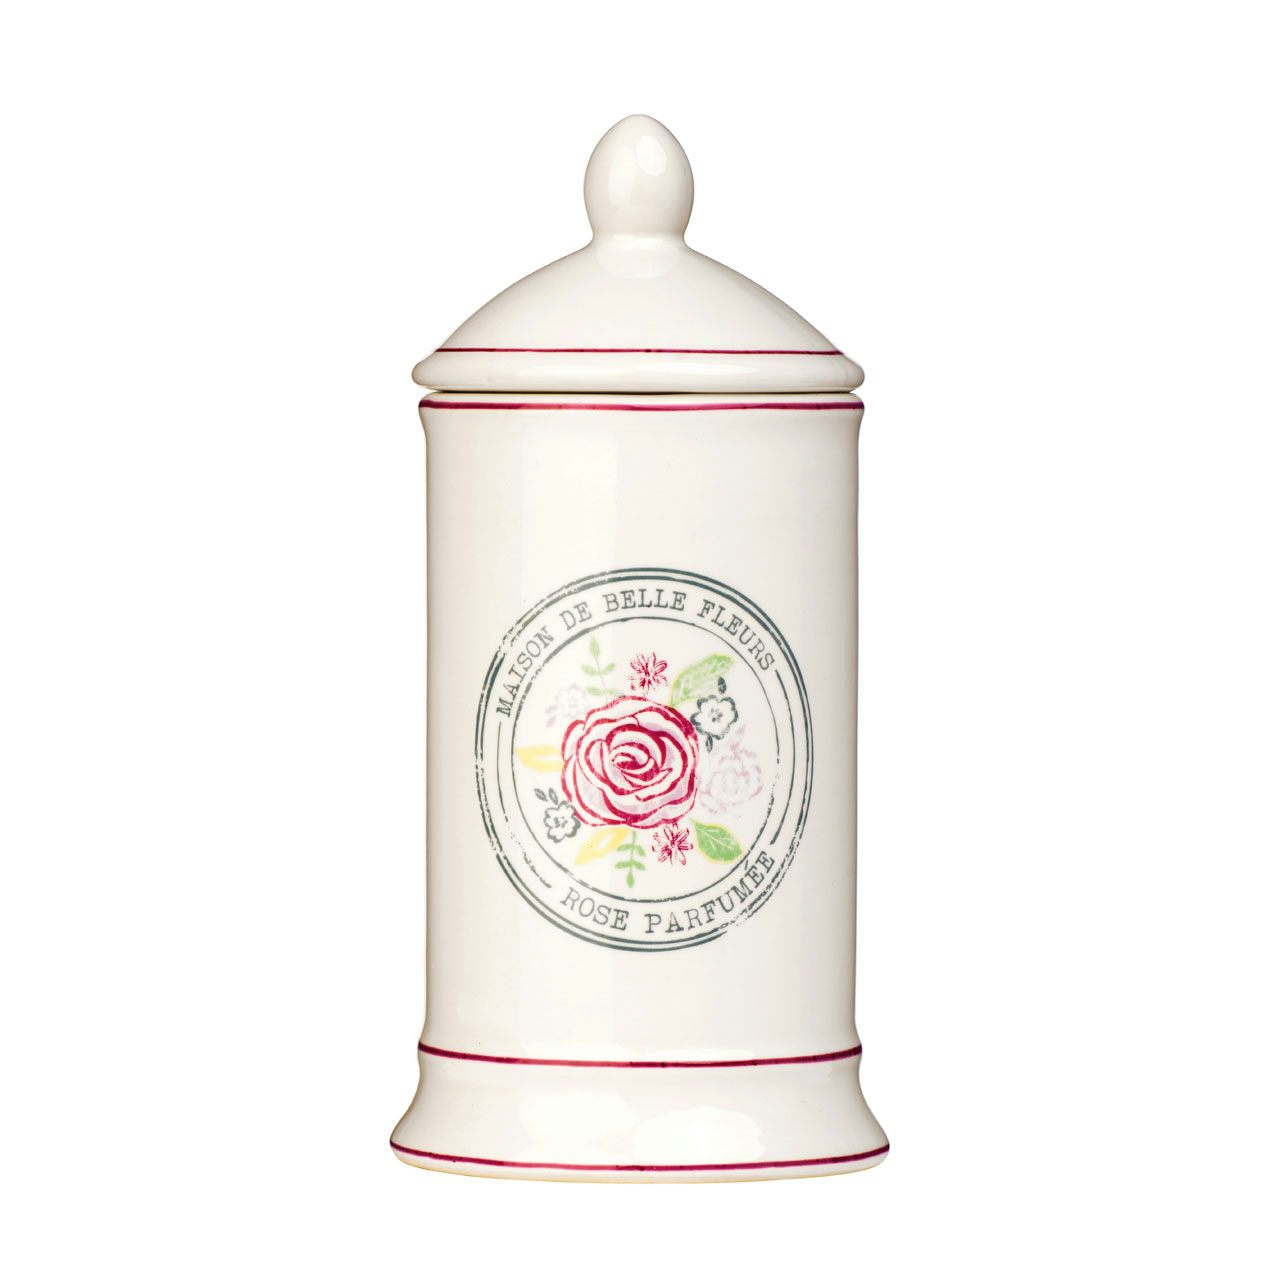 Accents Belle stoneware cream traditional storage jar